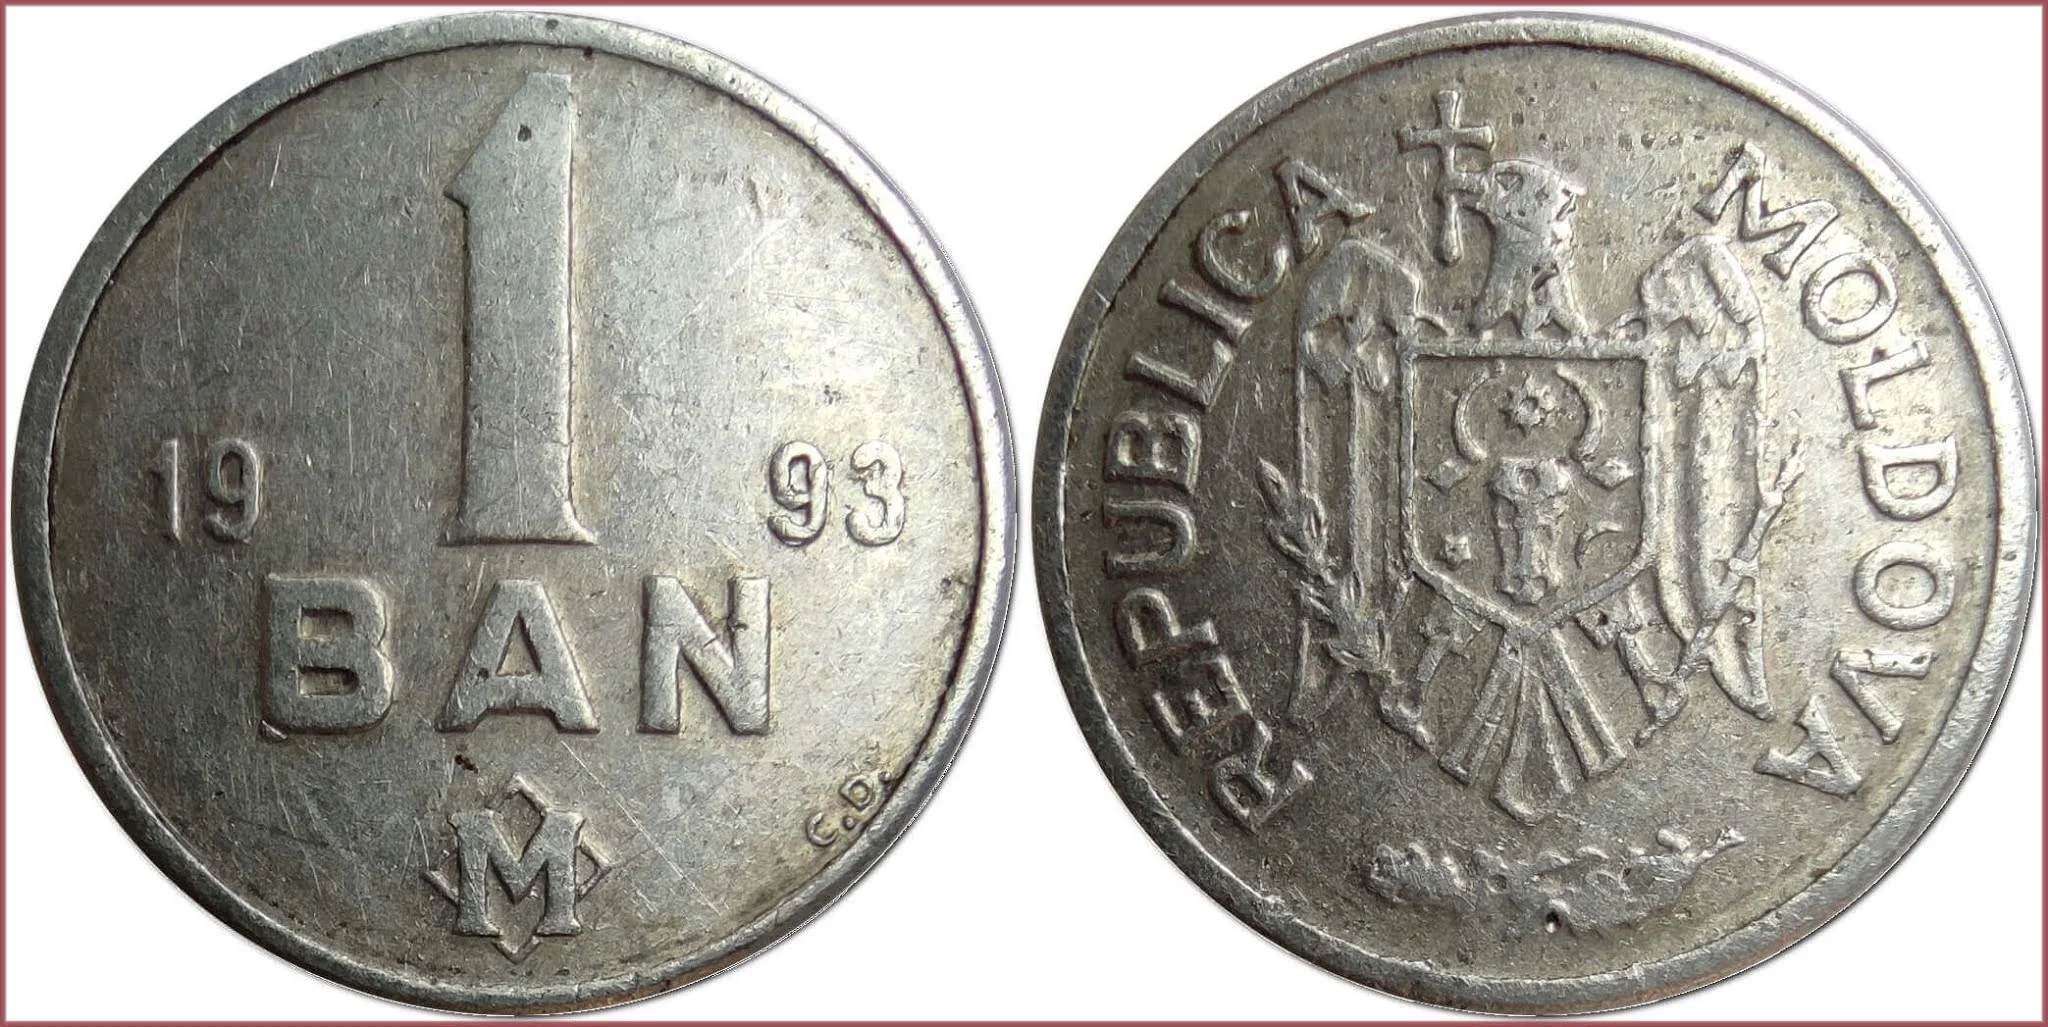 1 ban, 1993: Republic of Moldova